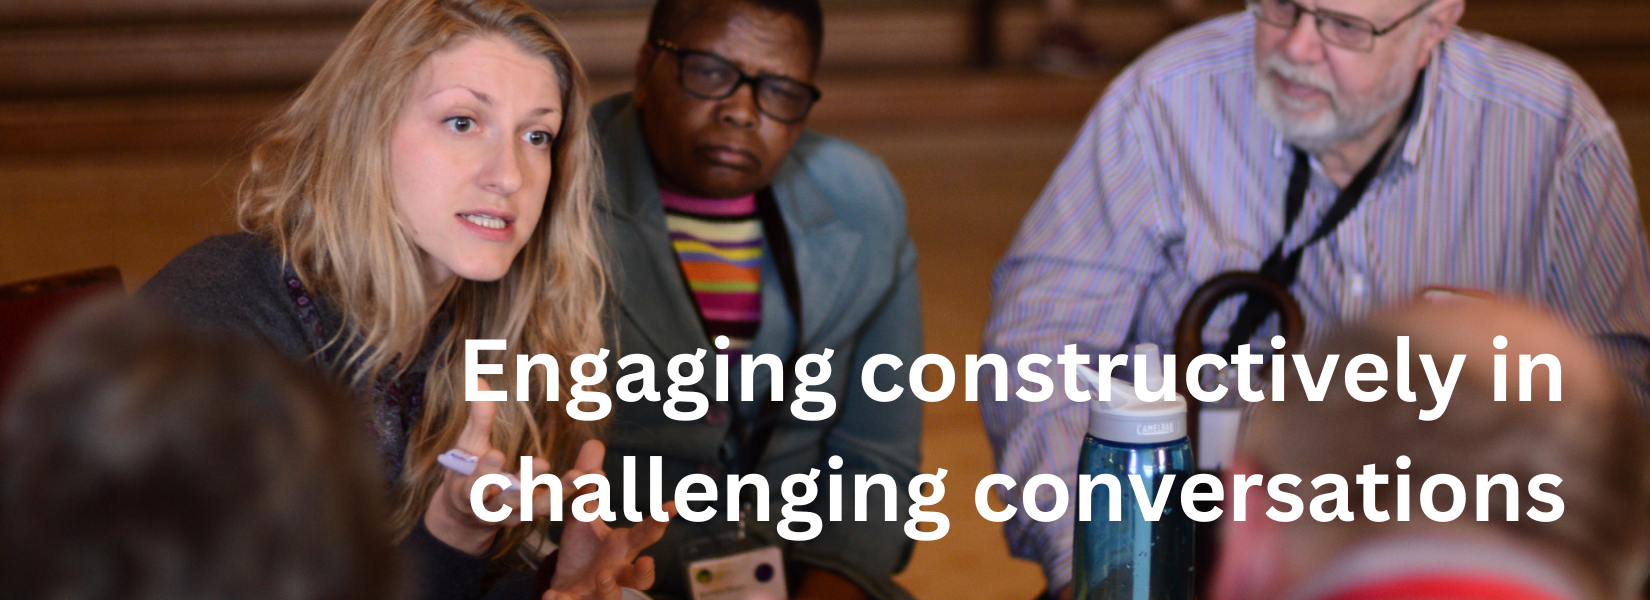 Engaging constructively in challenging conversations ECCC EN